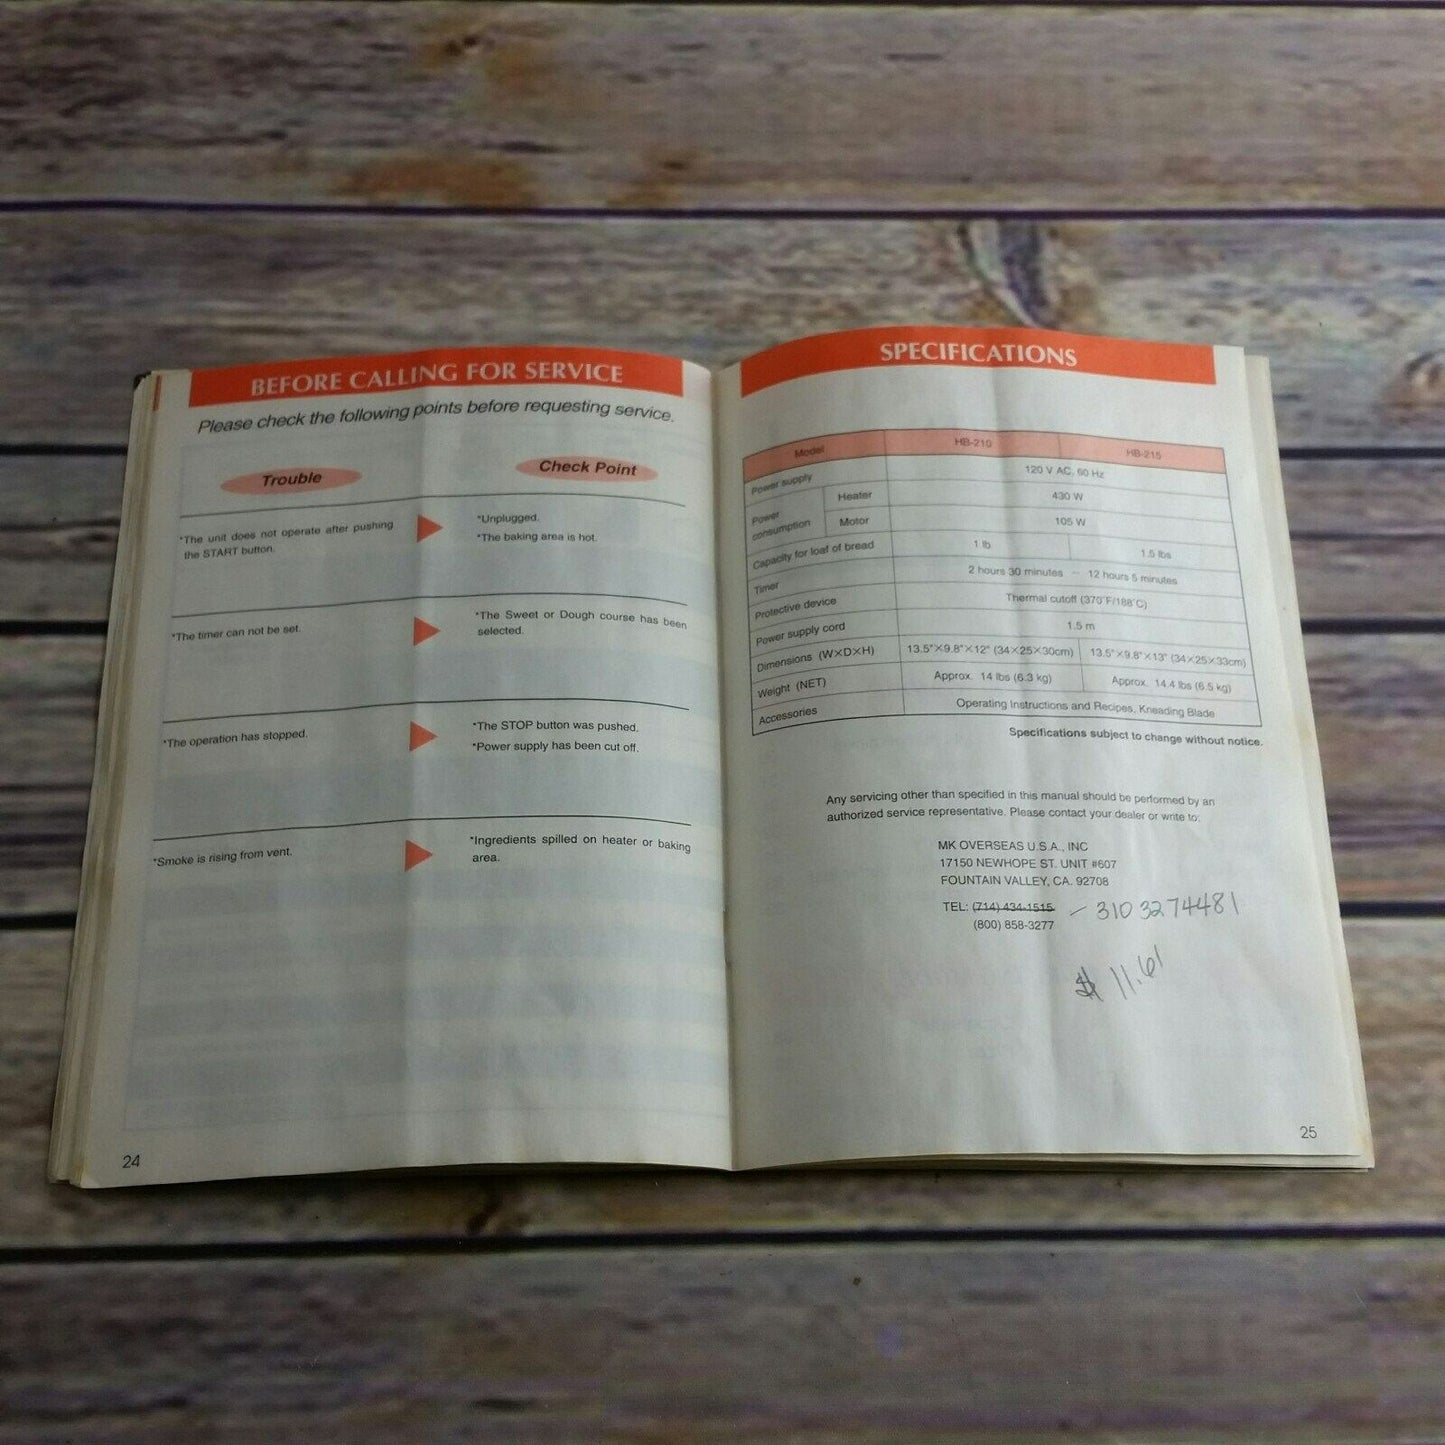 Vintage Mister Loaf Bread Maker Instructions Recipes Manual Bread Bakery Cook Book HB A630Z0 HB-210 HB-215